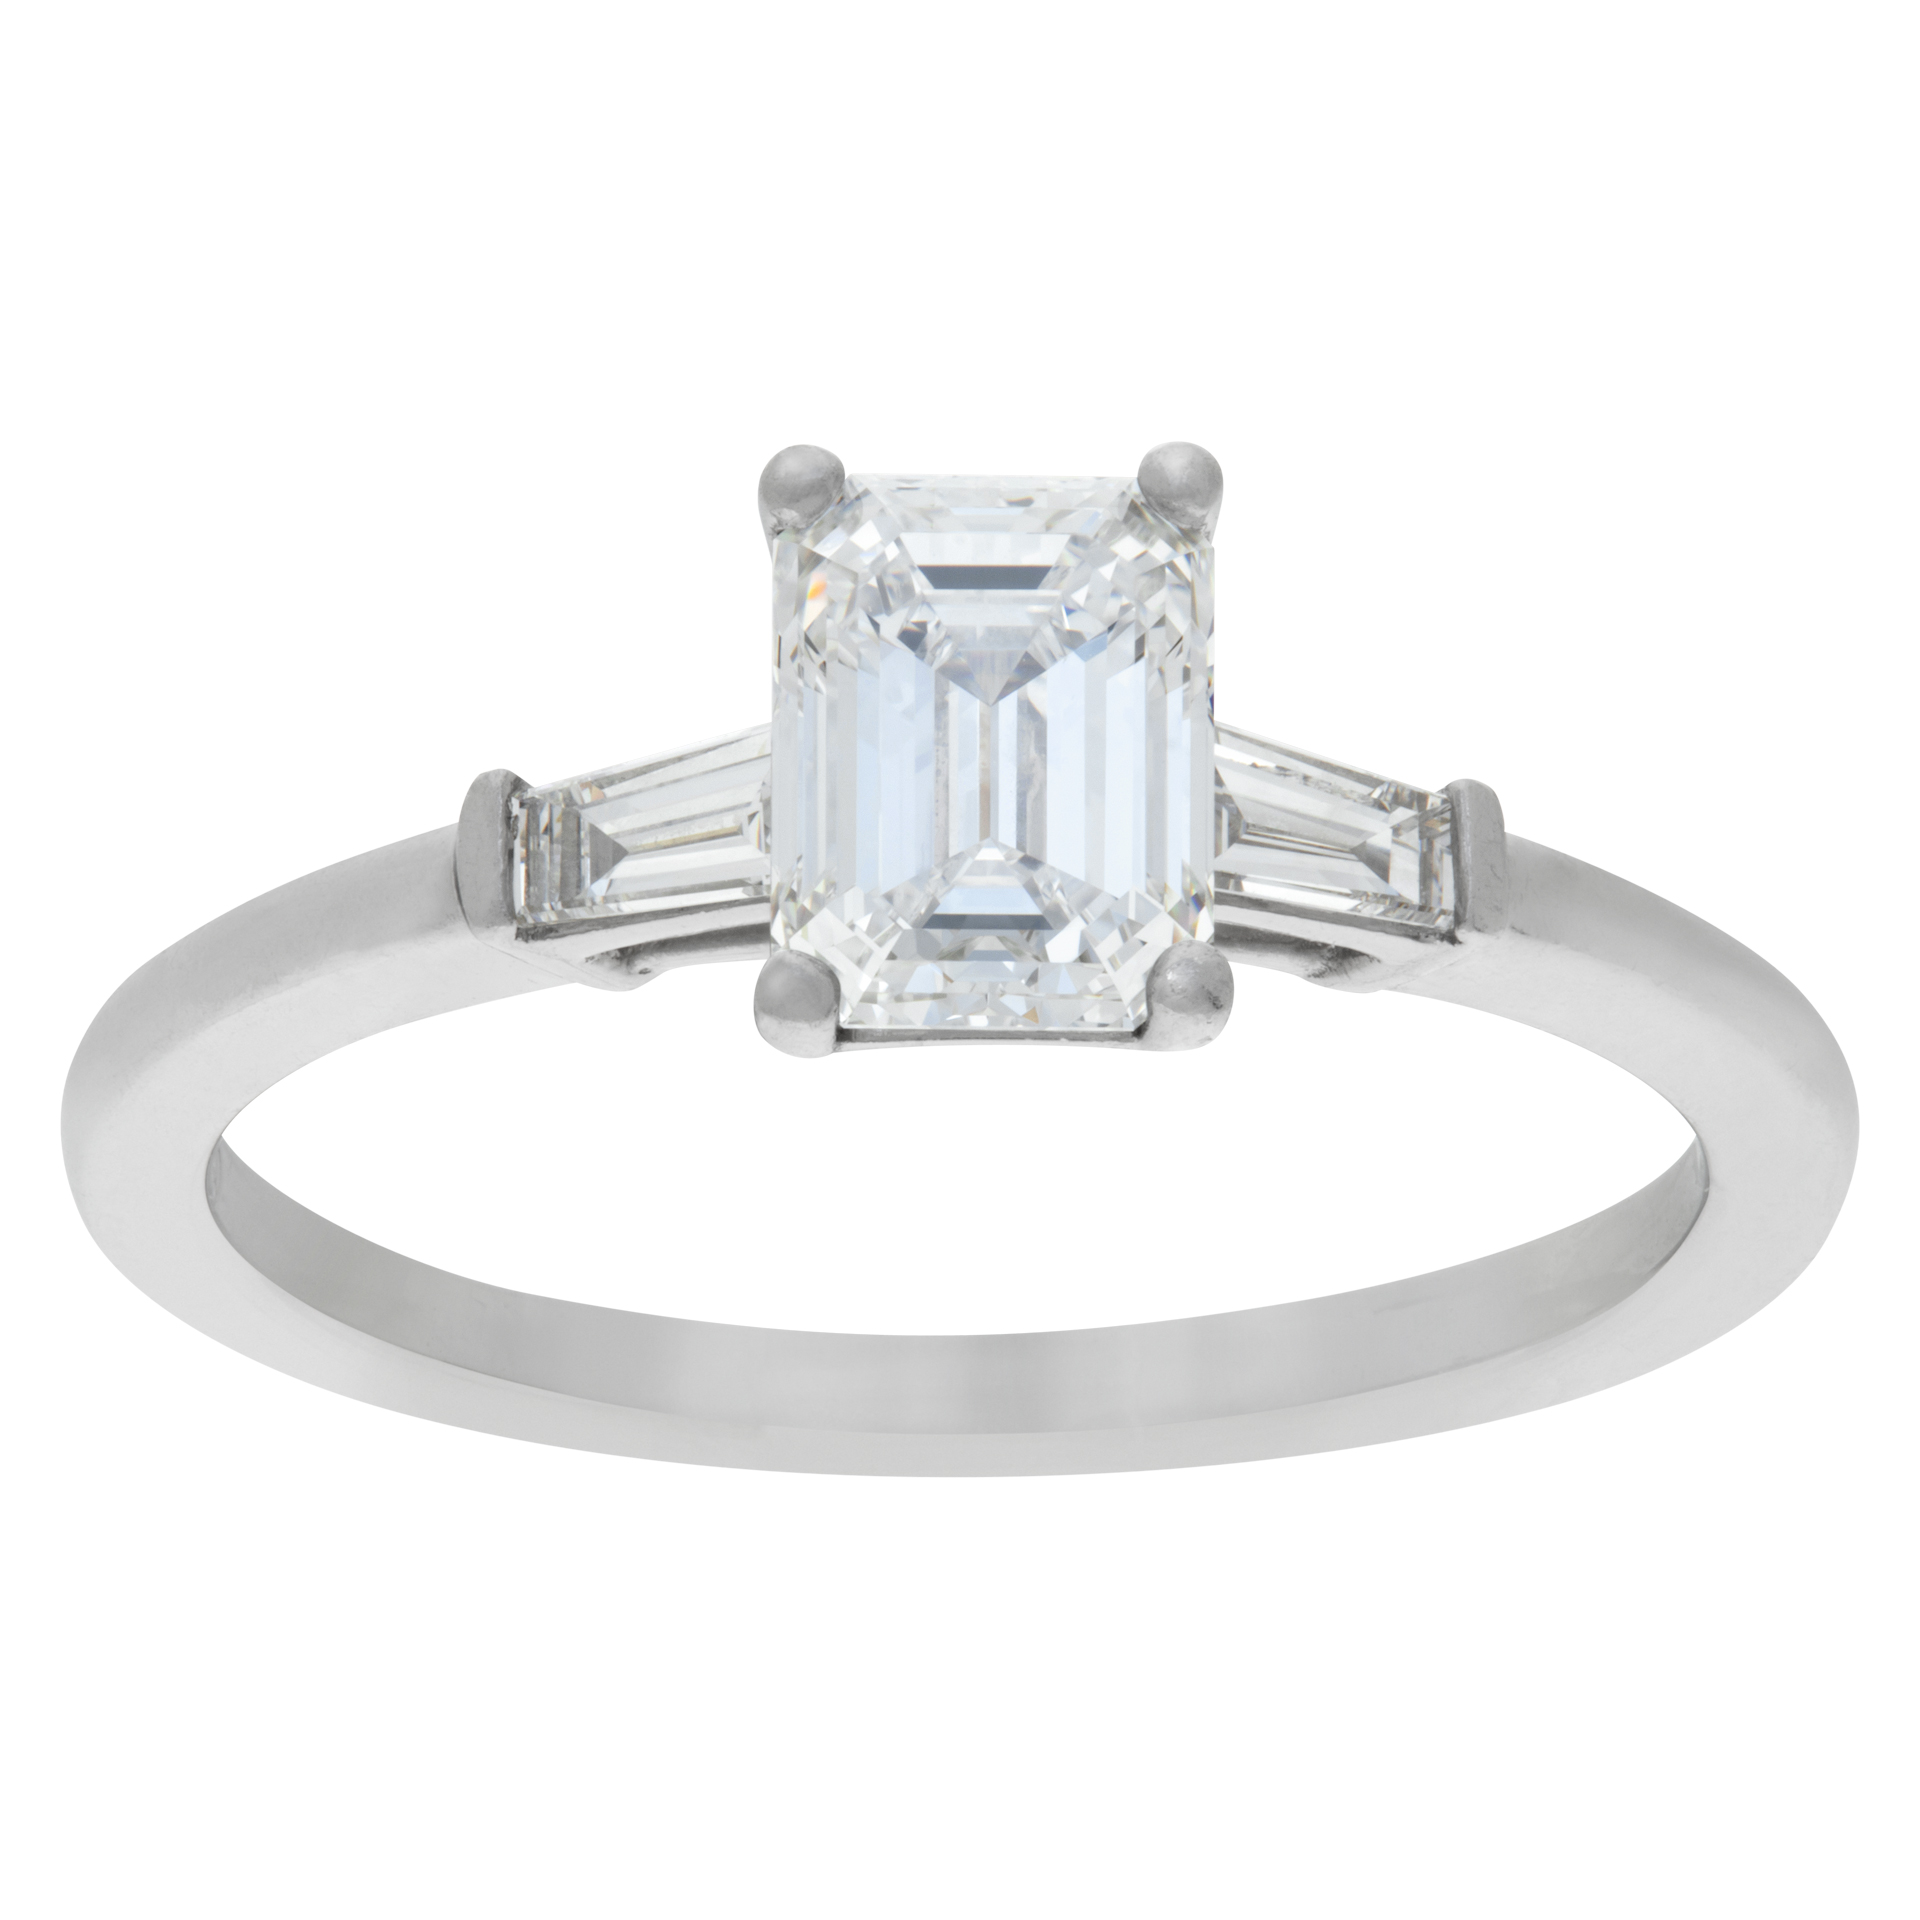 GIA certified emerald cut diamond 1.04 carat (D color, VVS2 clarity) ring in platinum